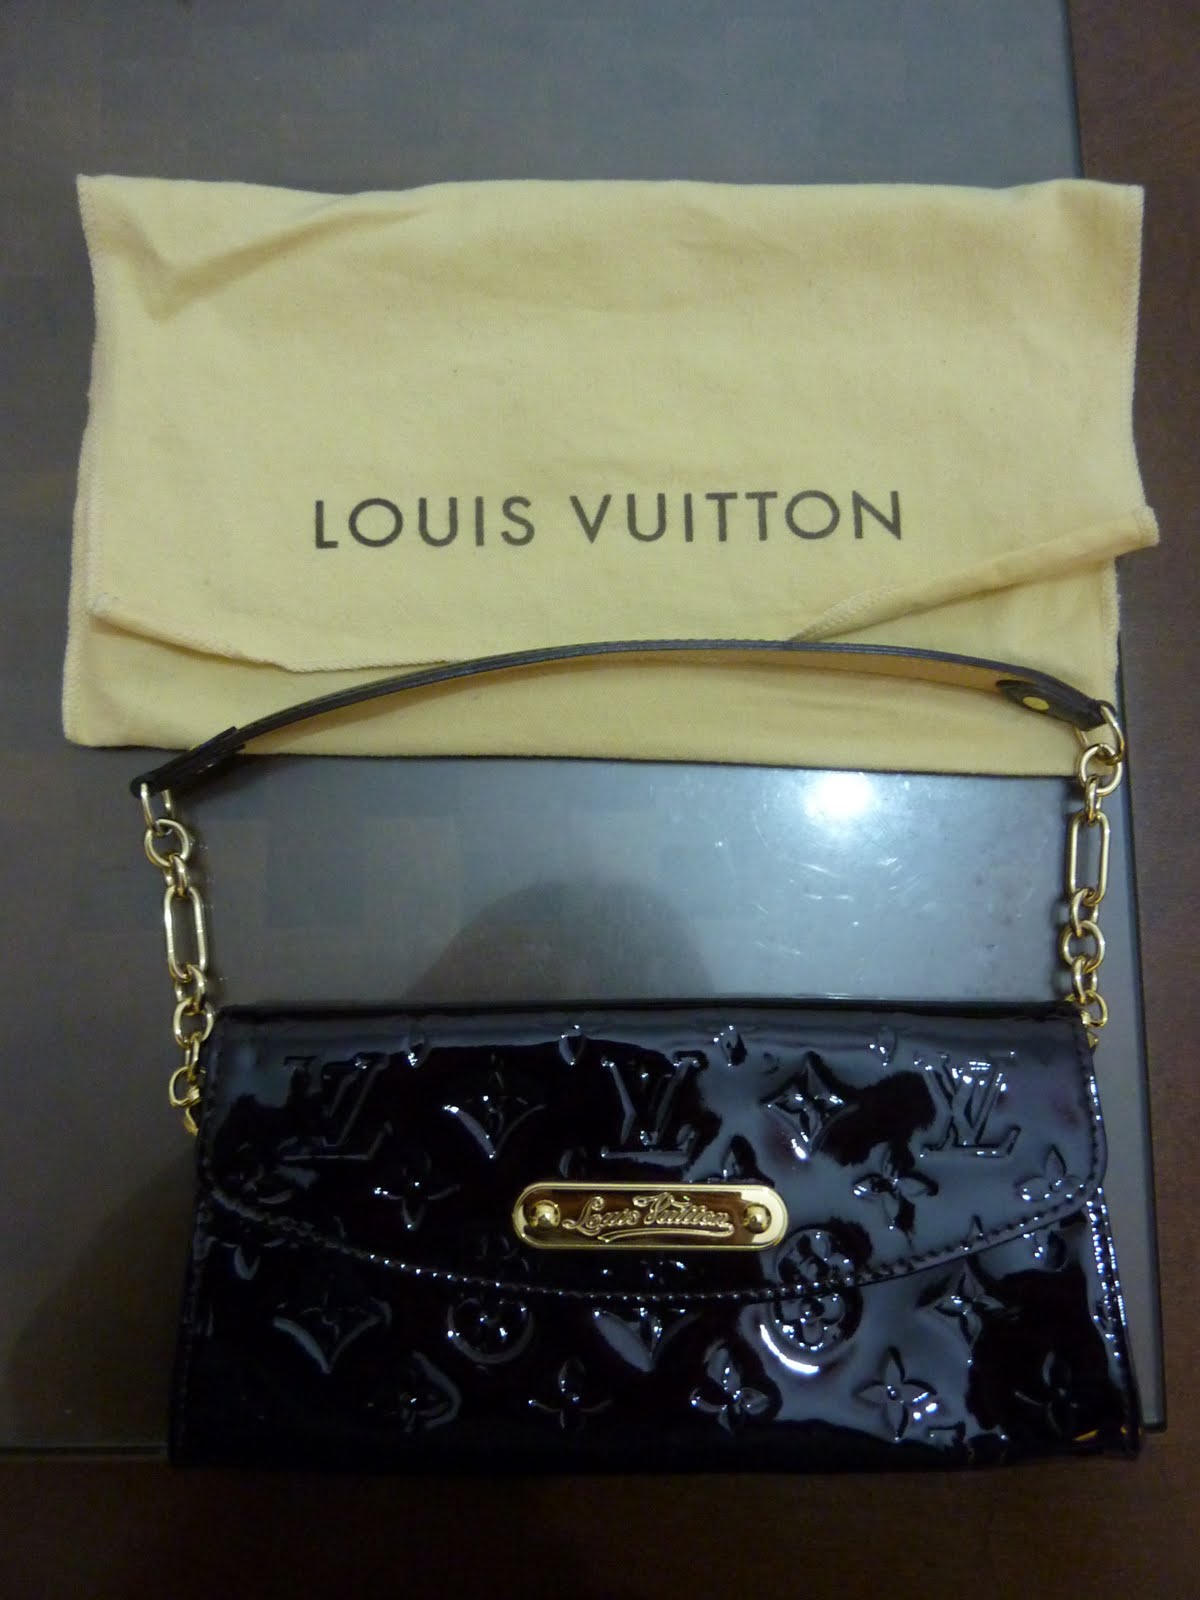 Bolsa Louis Vuitton Sunset Blvd Amarante Original - BII1